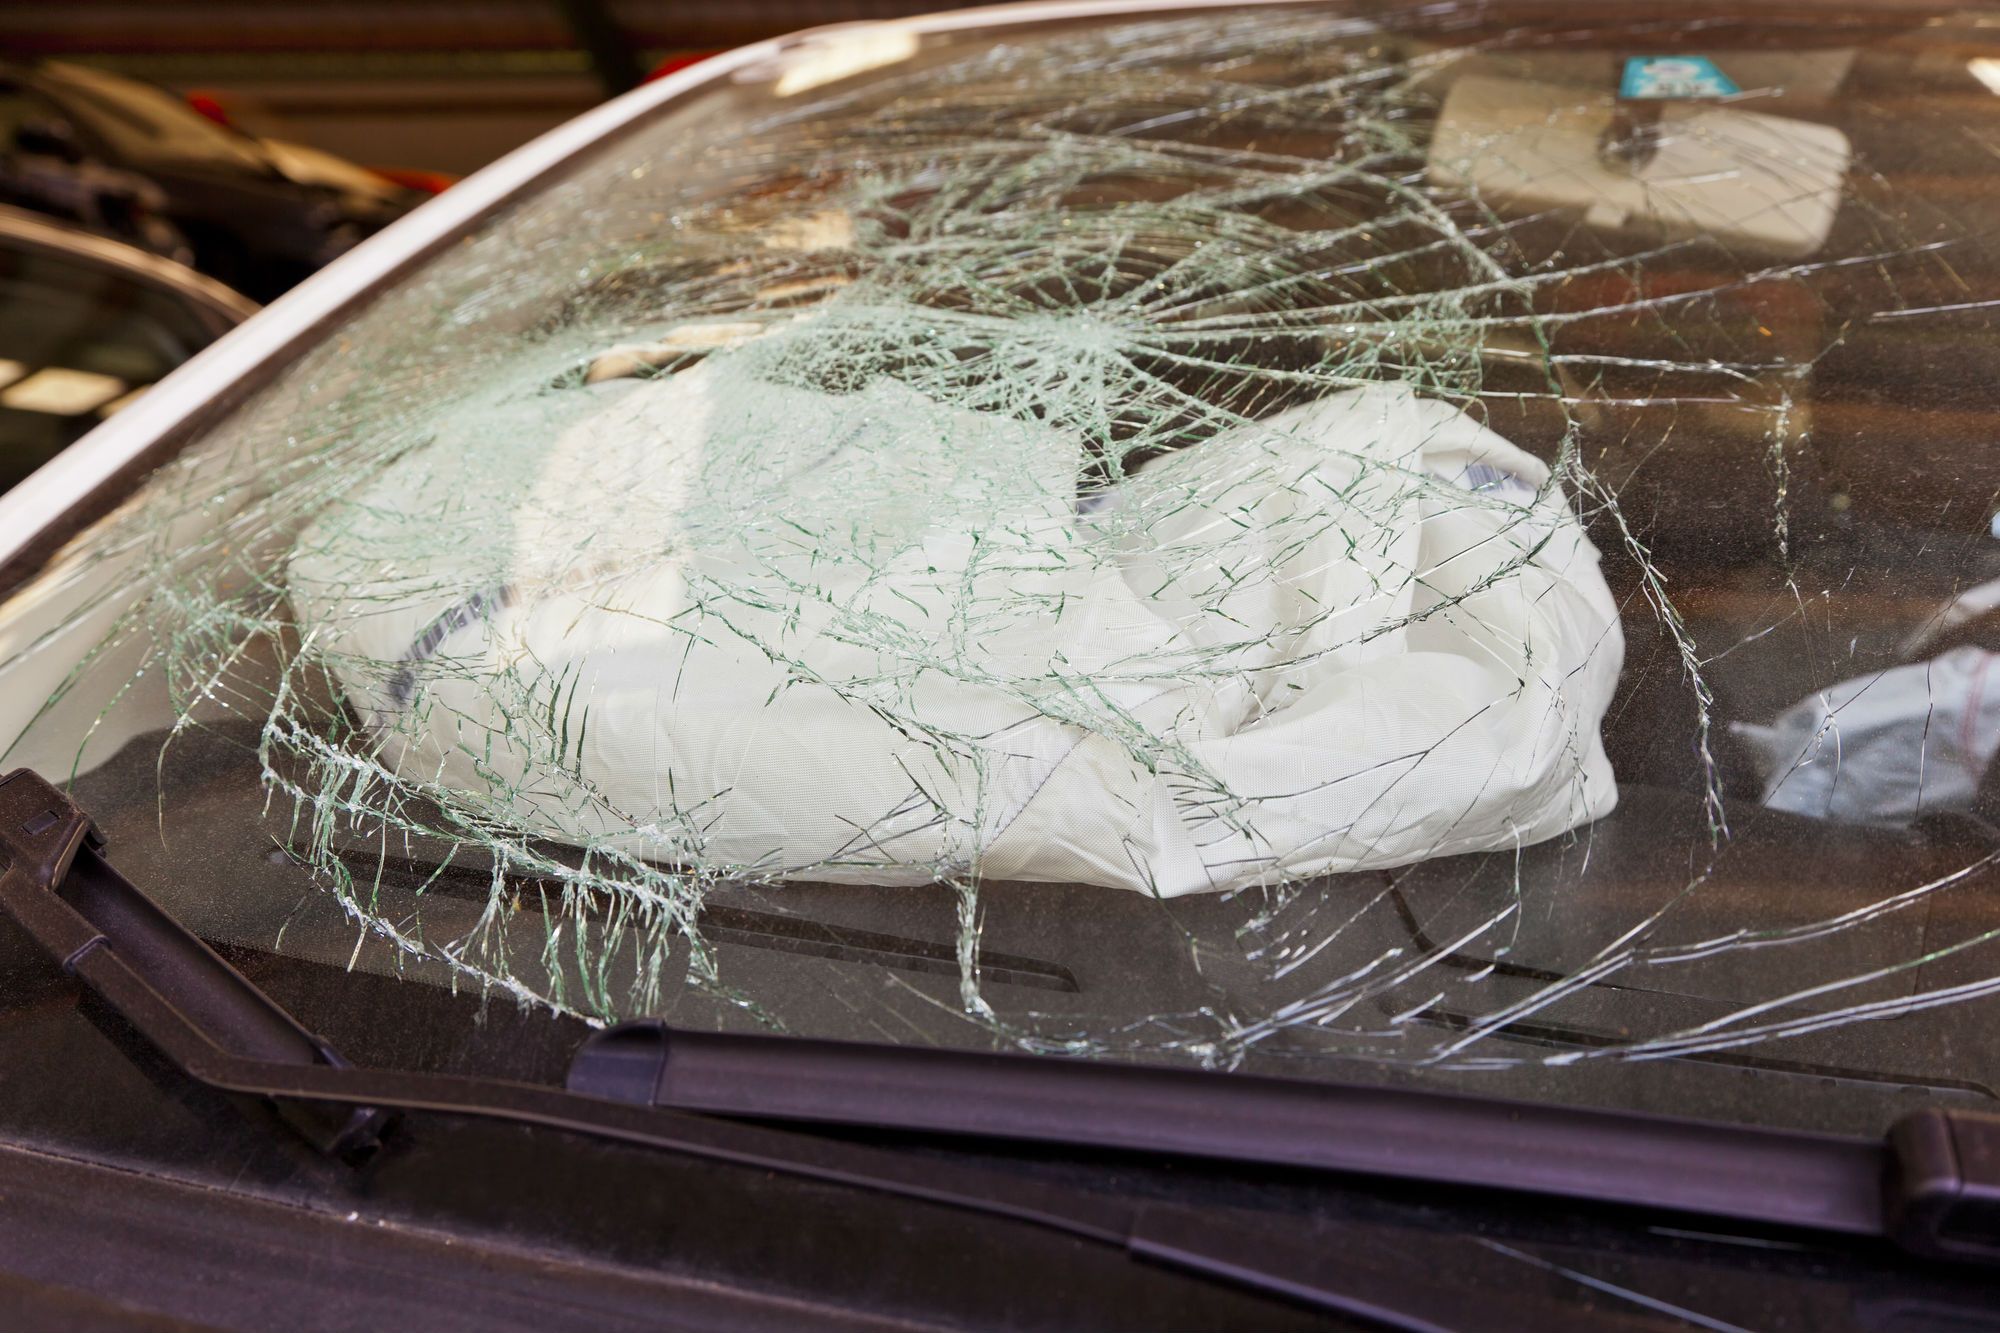 Closeup of deployed airbag behind broken windshield of crashed car